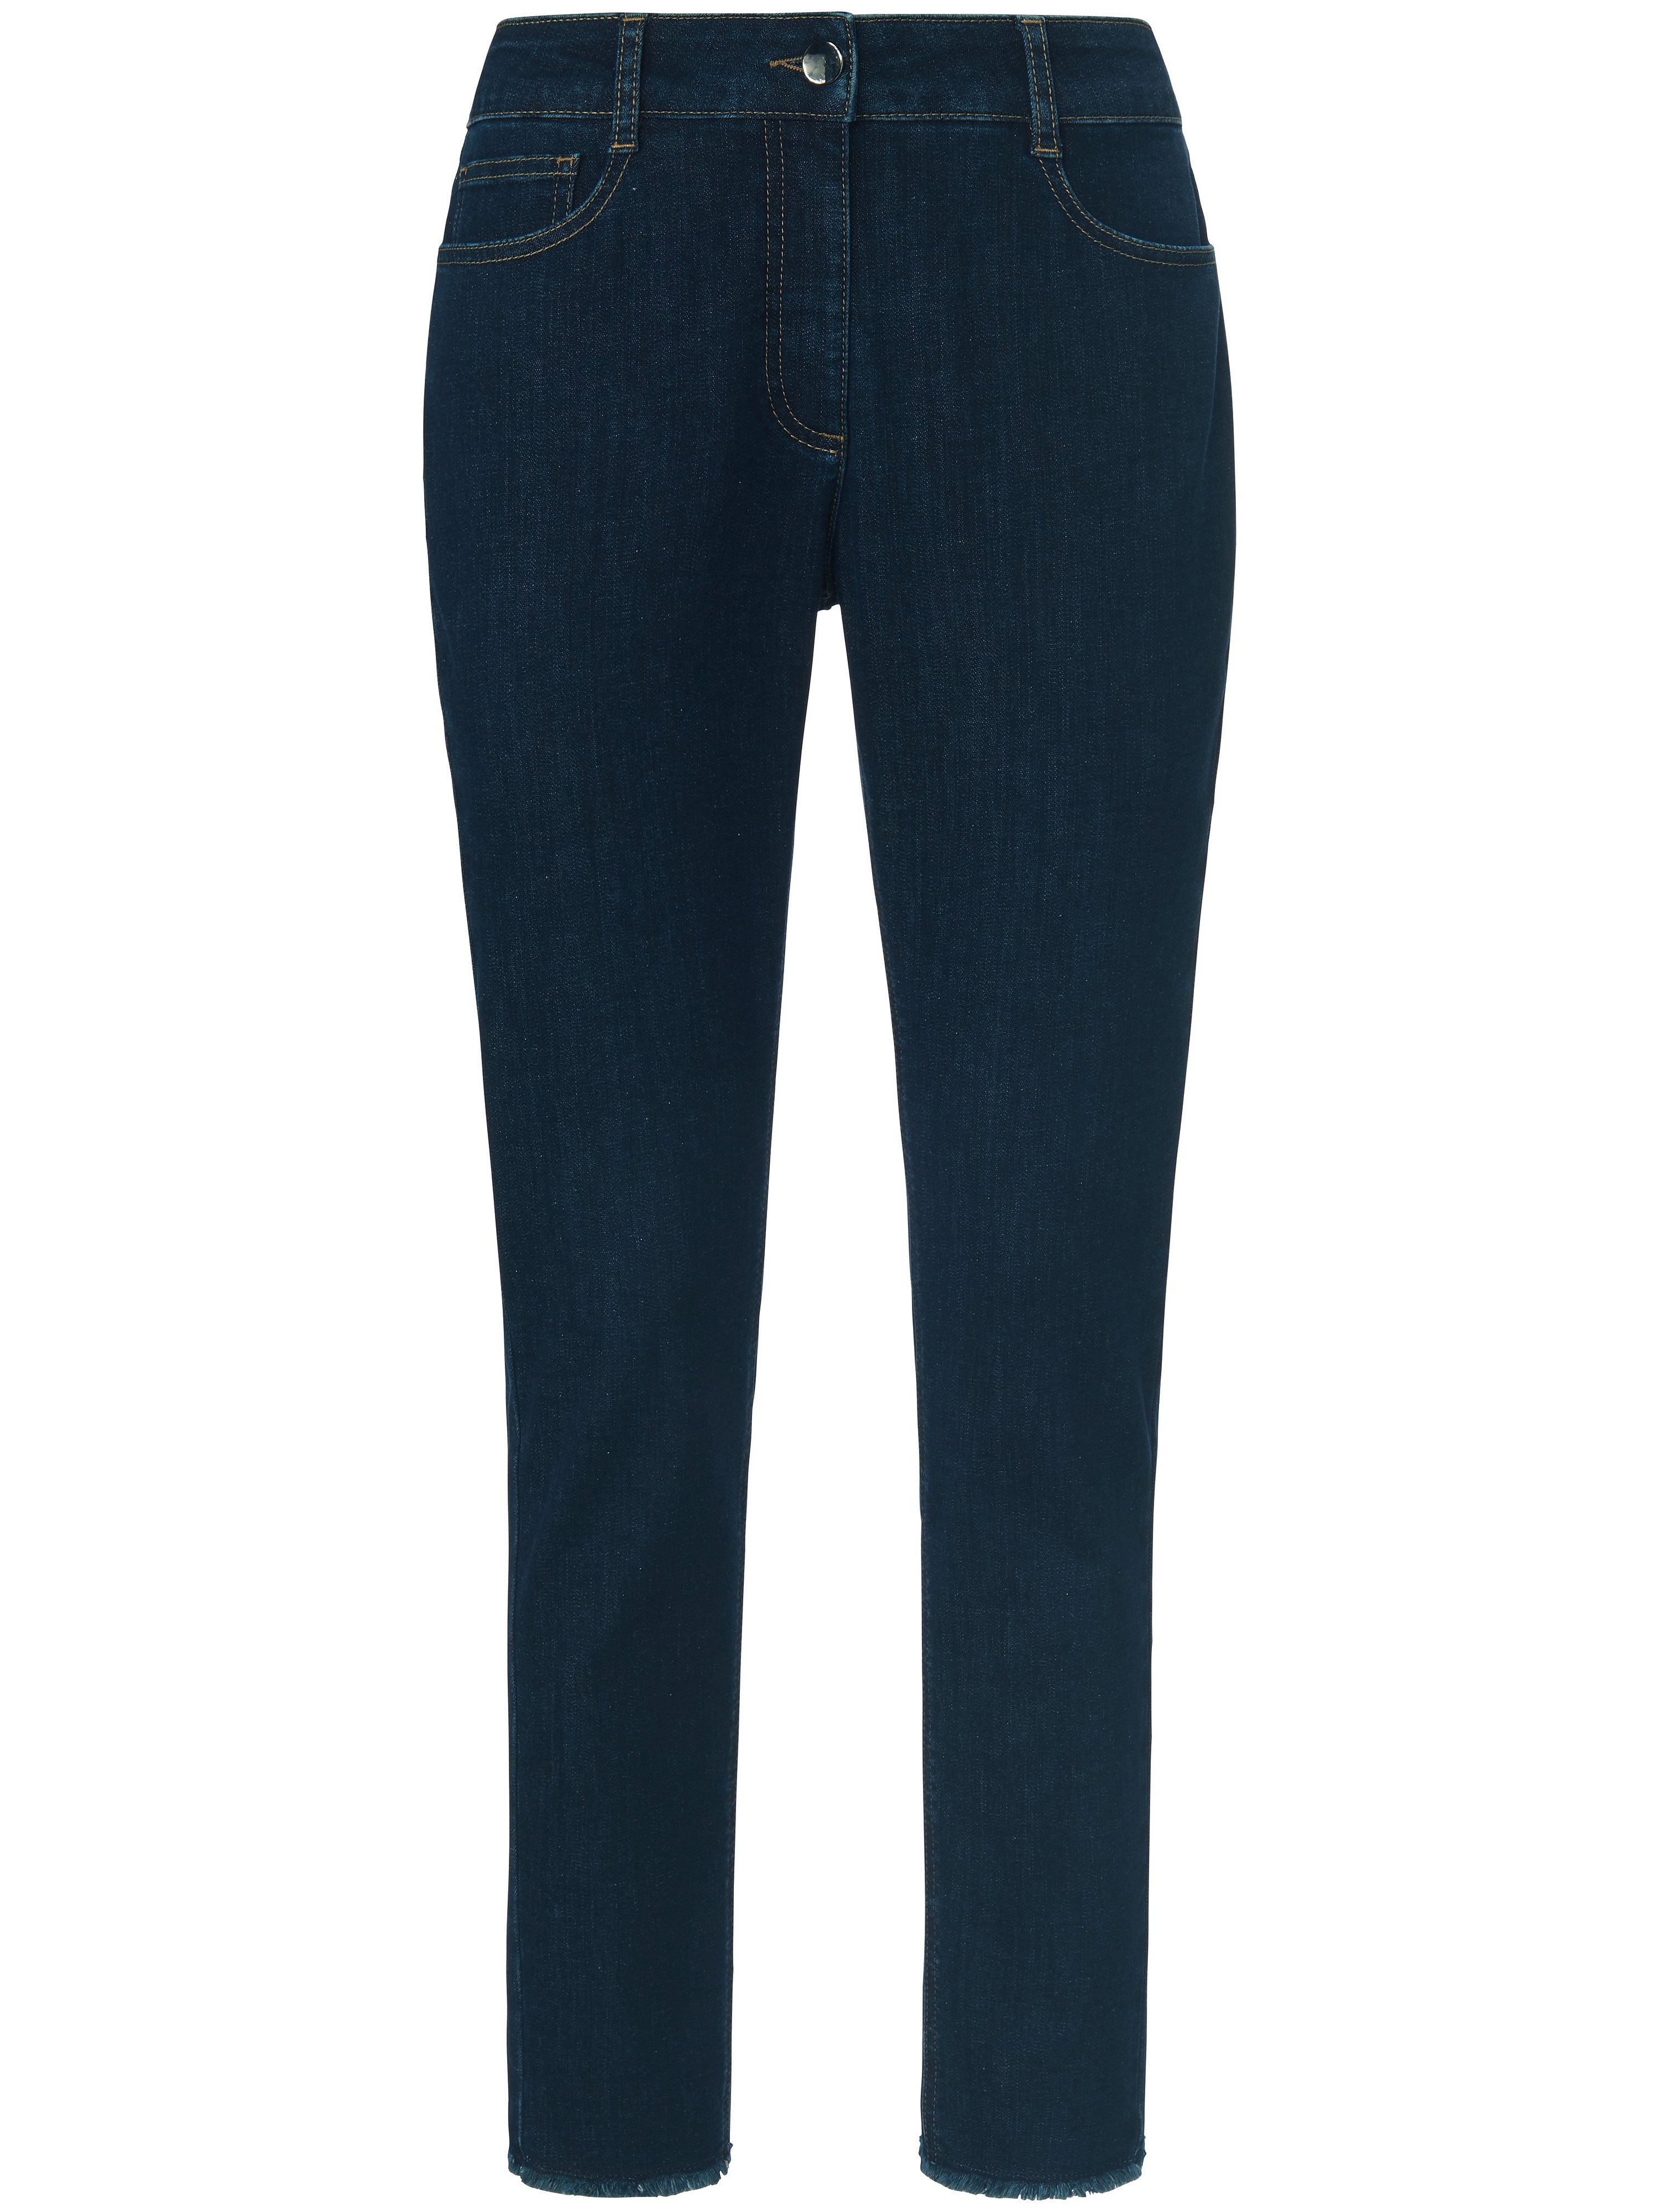 Jeans in smal 5 pocketsmodel Van MYBC blauw